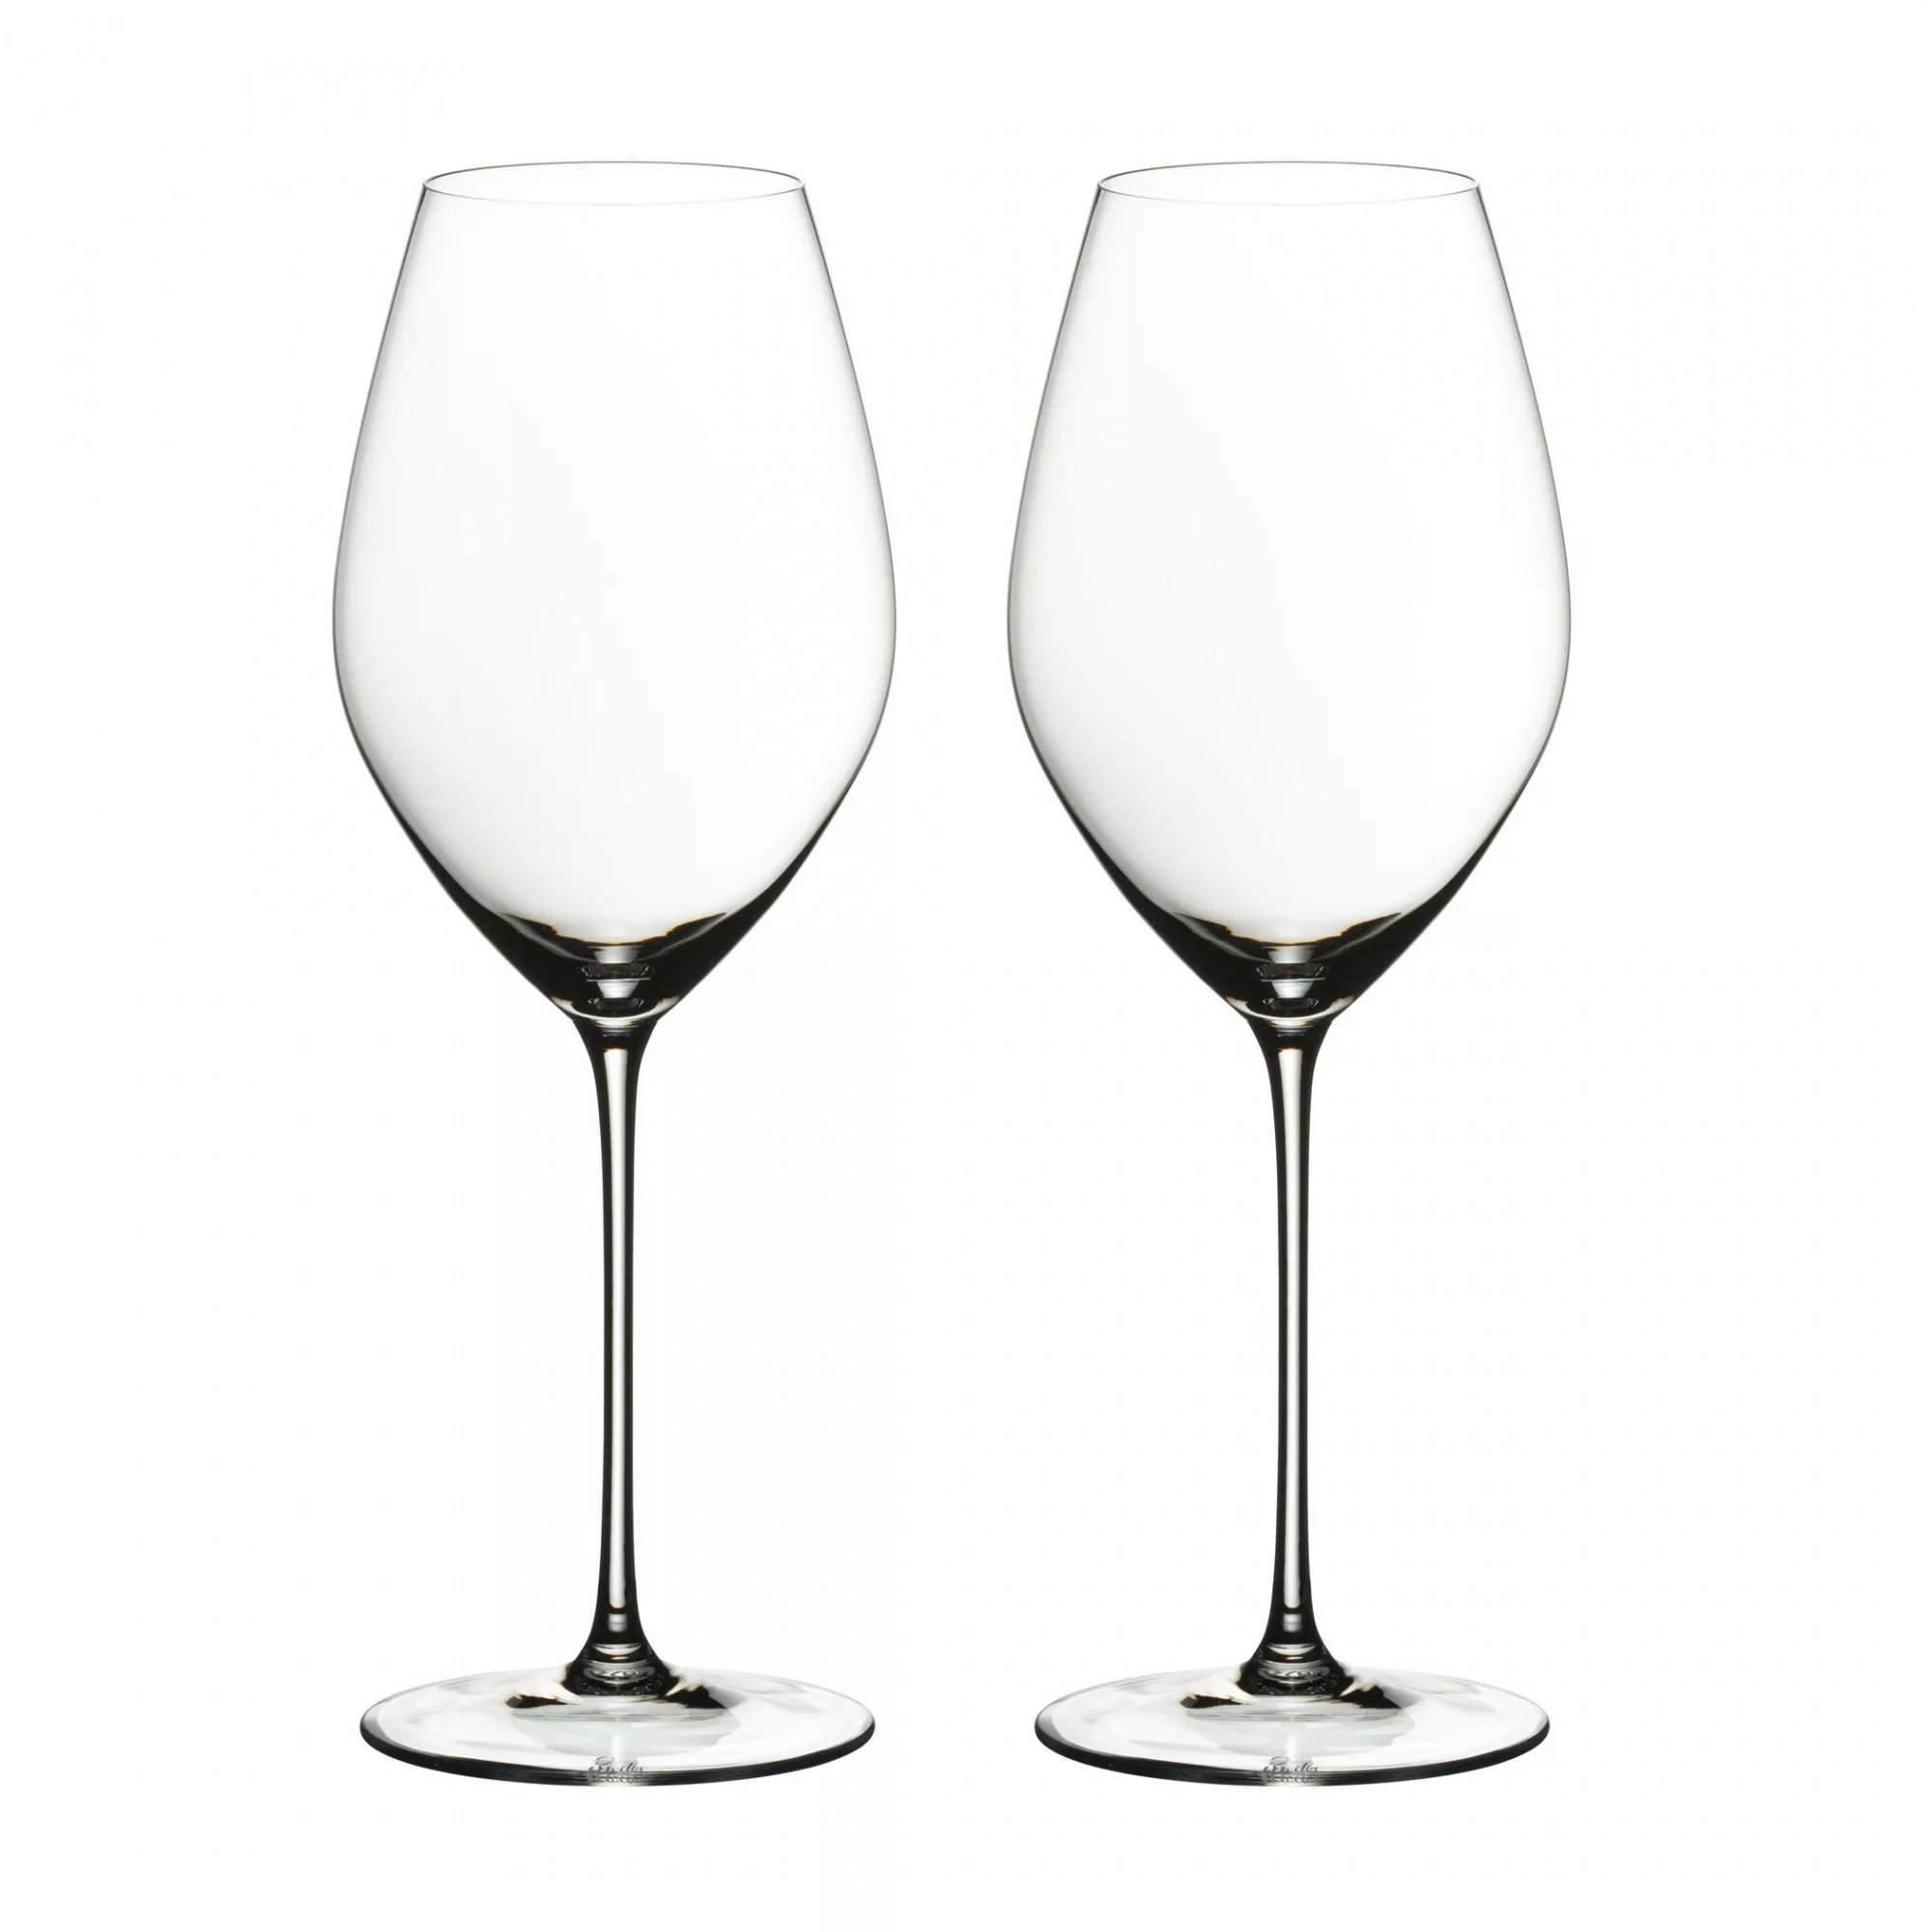 RIEDEL THE WINE GLASS COMPANY Champagnerglas »Veritas«, (Set, 2 tlg.), Made günstig online kaufen